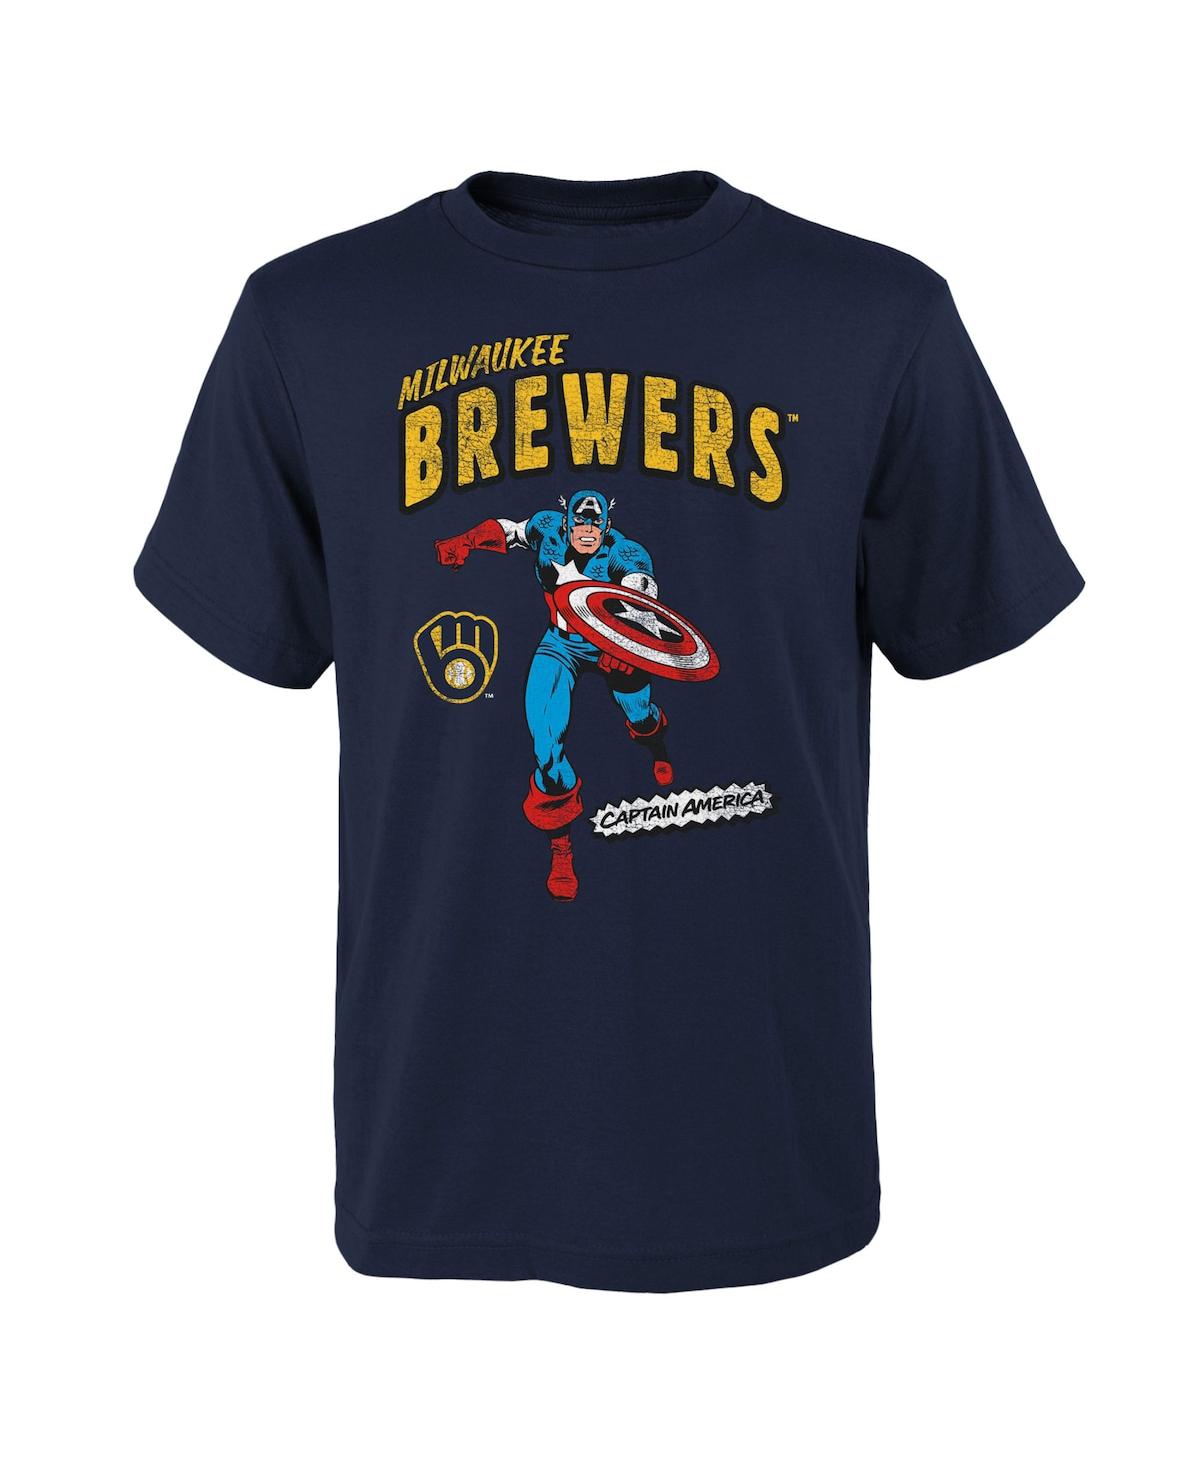 Outerstuff Kids' Big Boys And Girls Navy Milwaukee Brewers Team Captain America Marvel T-shirt